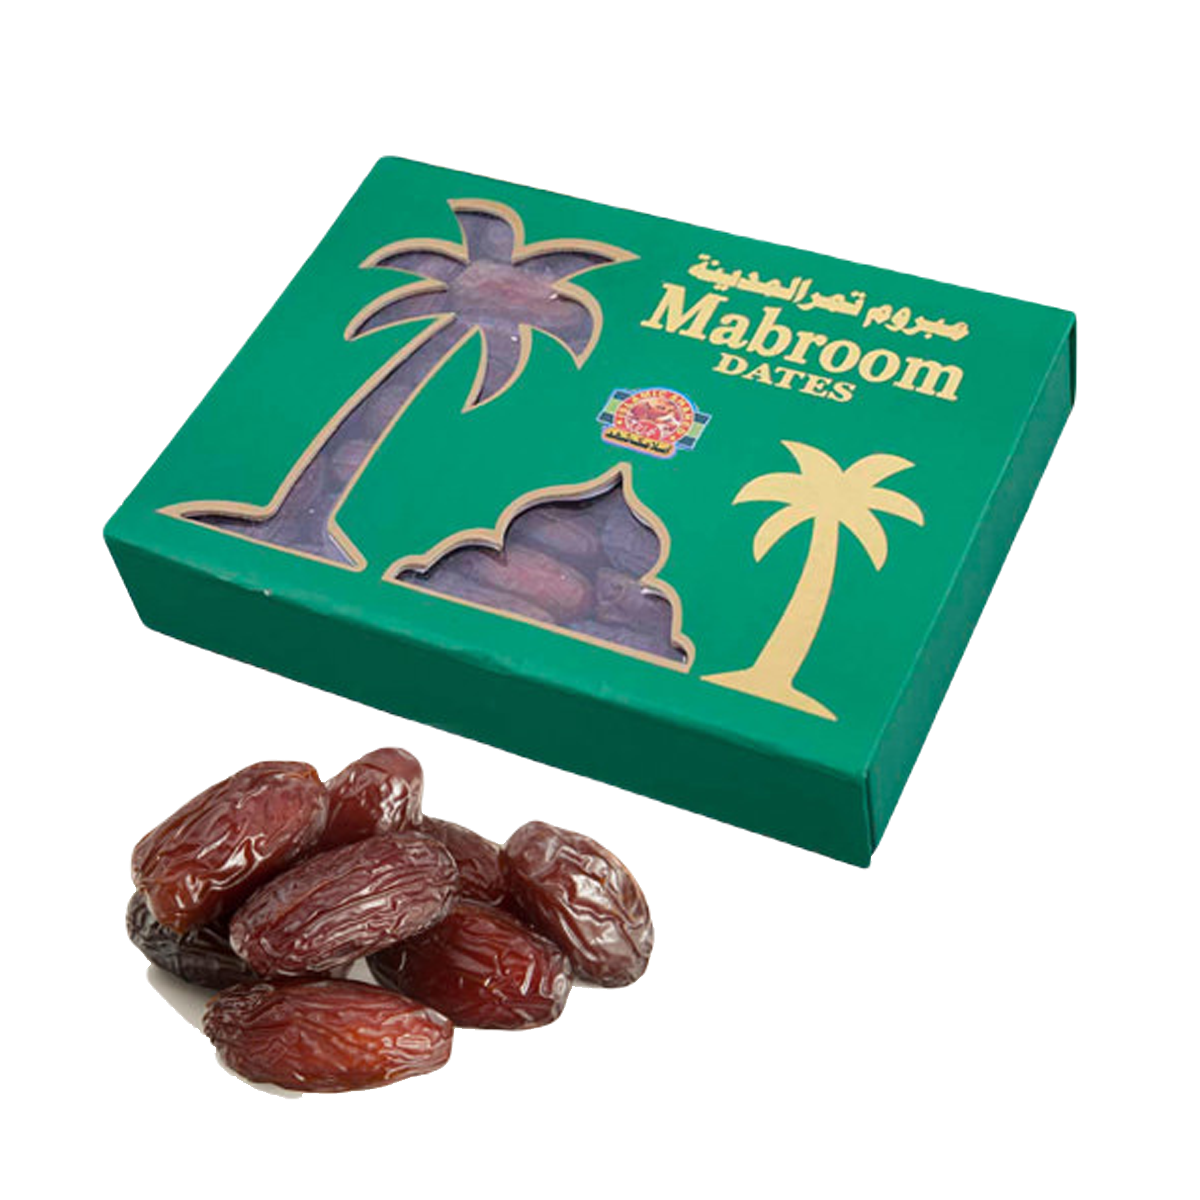 Mabroom Dates 150gm